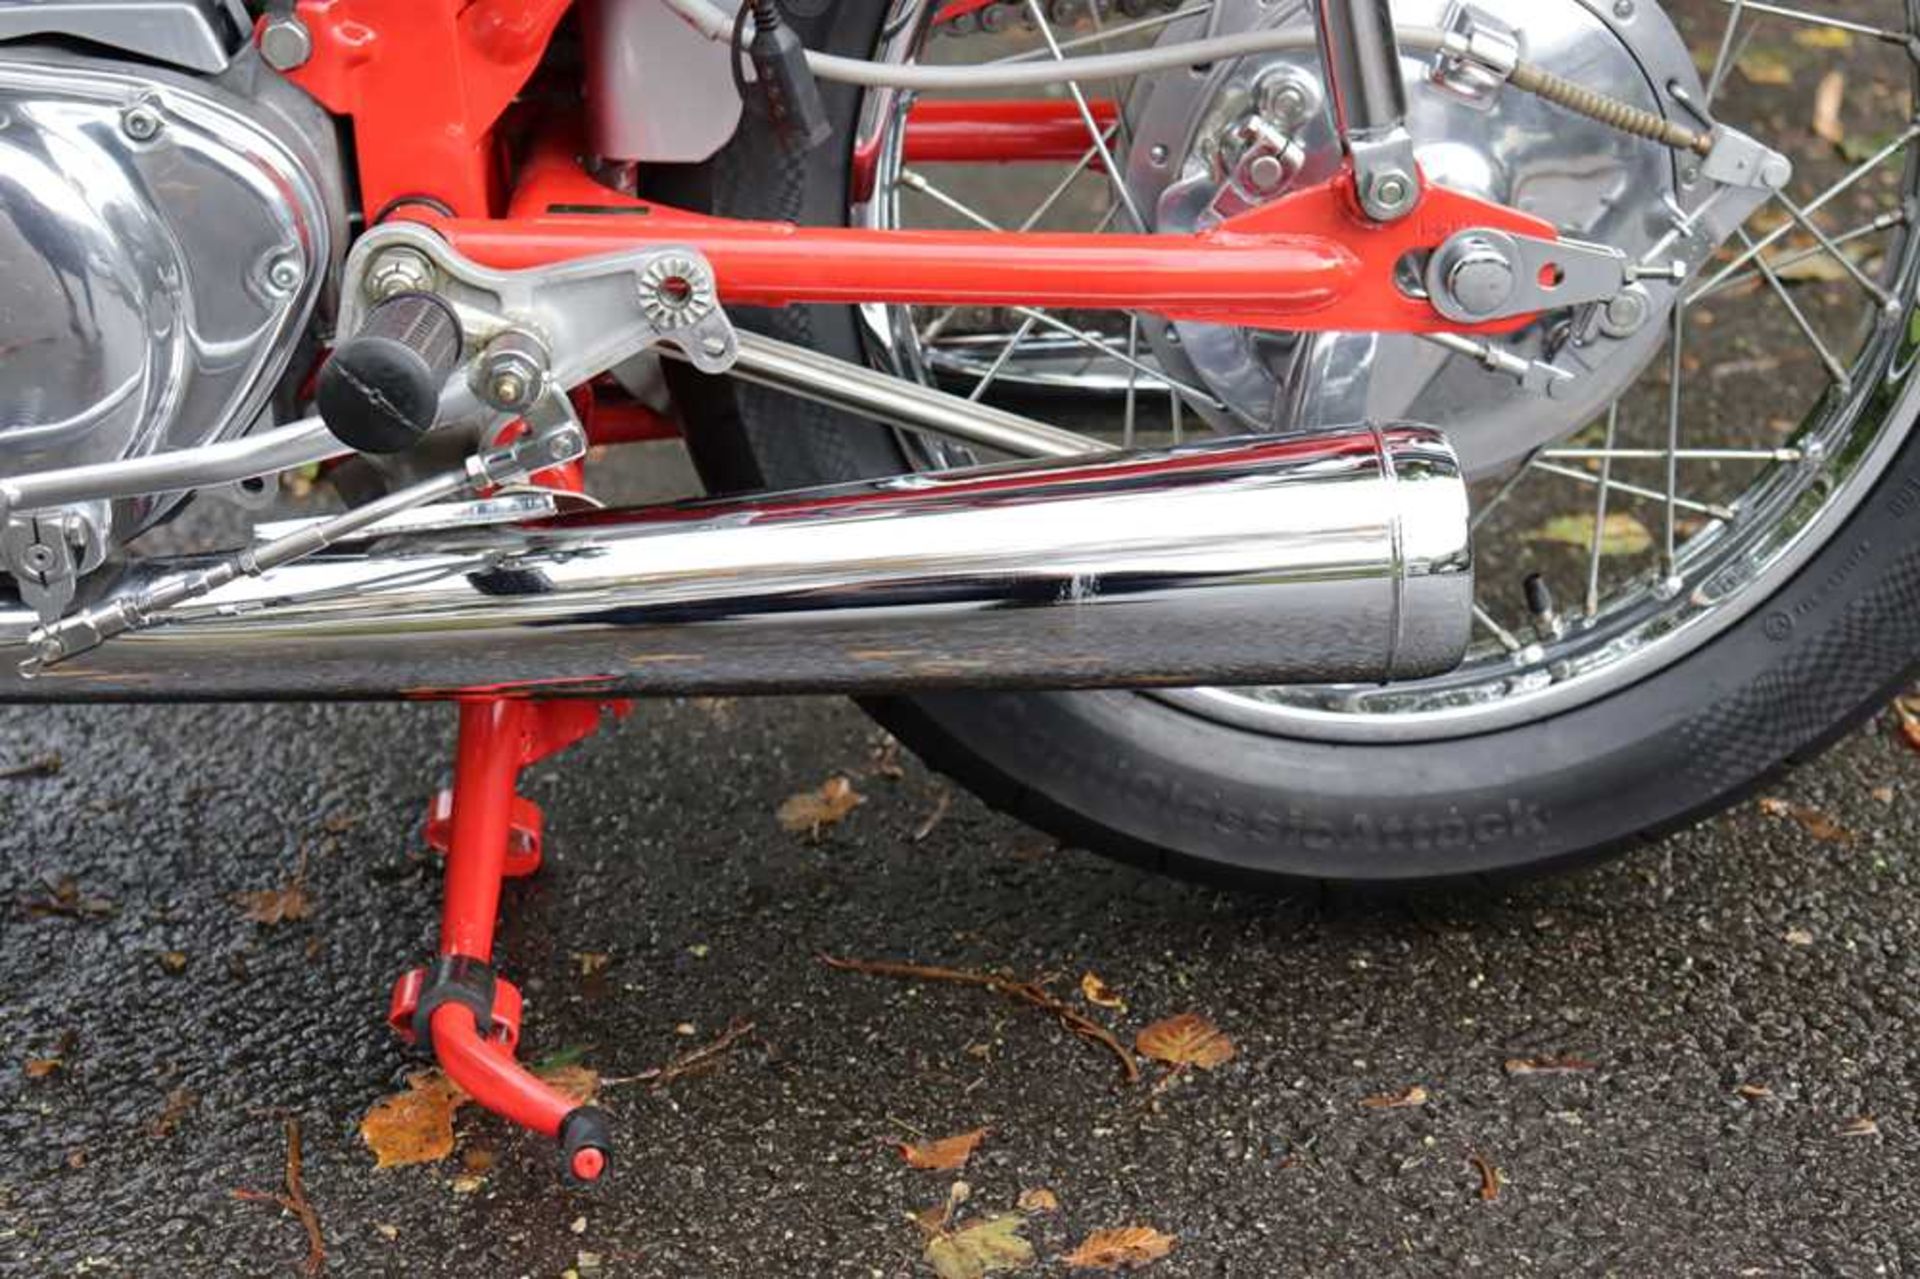 1966 Honda CB77 Restored to a high standard - Image 55 of 65